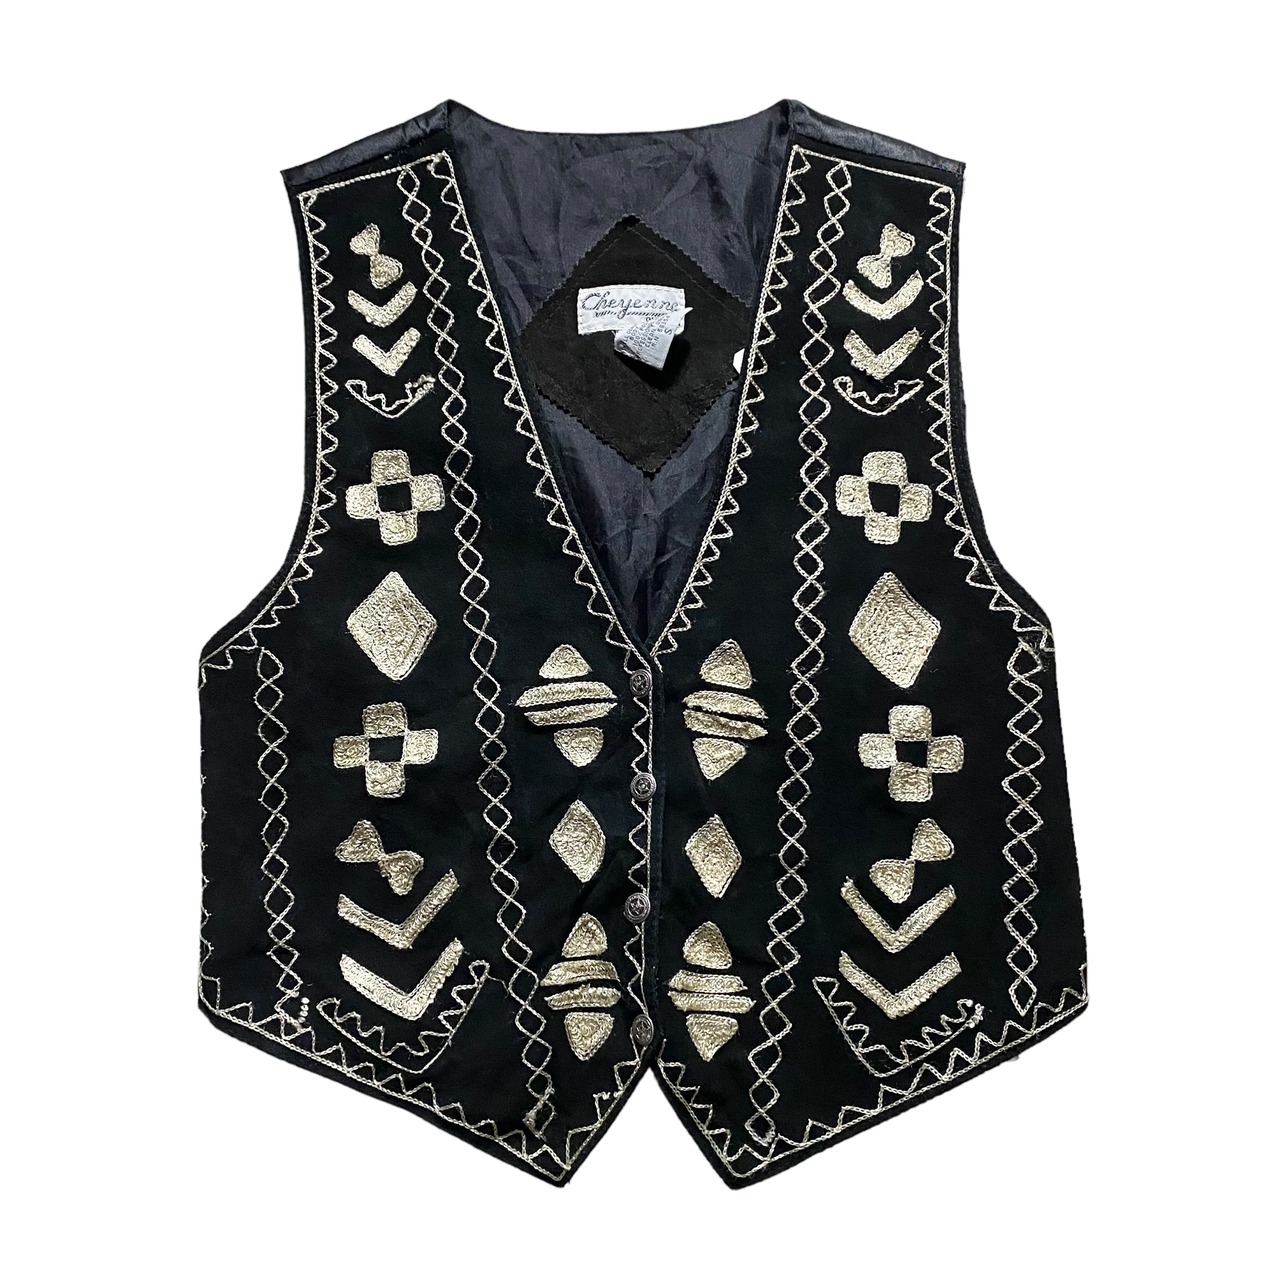 vintage embroidery suede vest